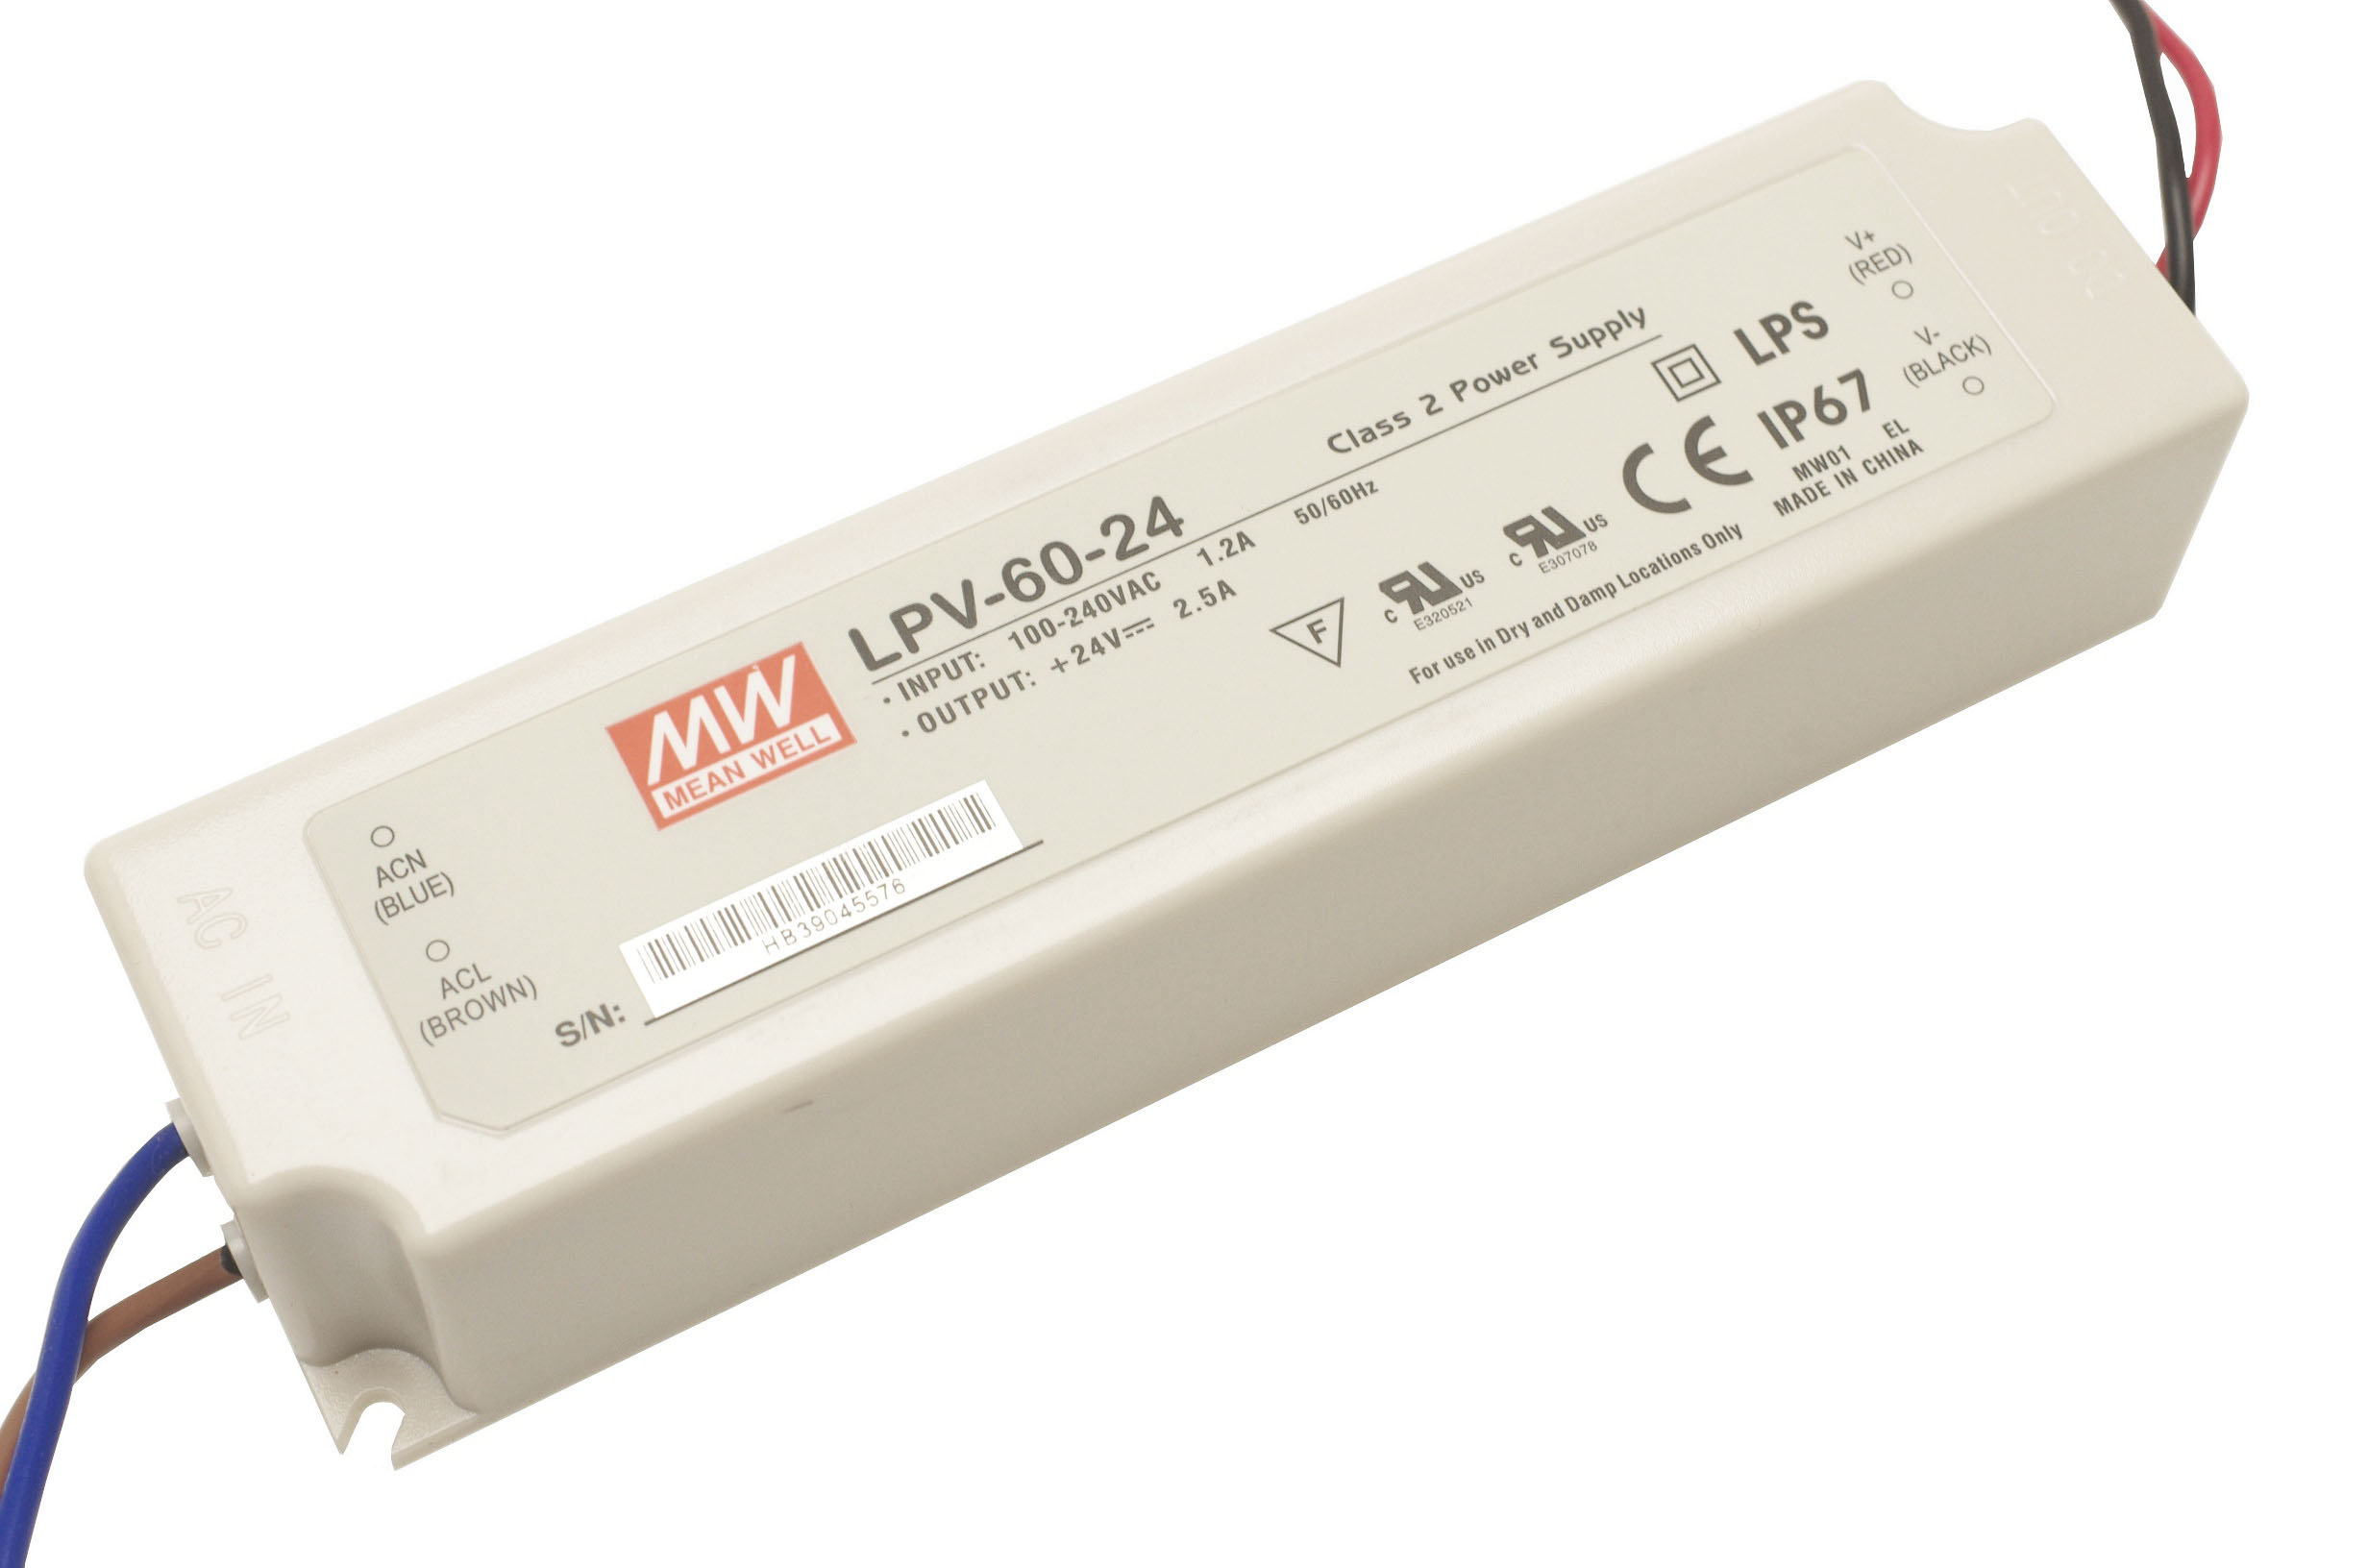 LPV-60-24 - LED Schaltnetzteil ohne PFC - 60W 24V/2,5A CV